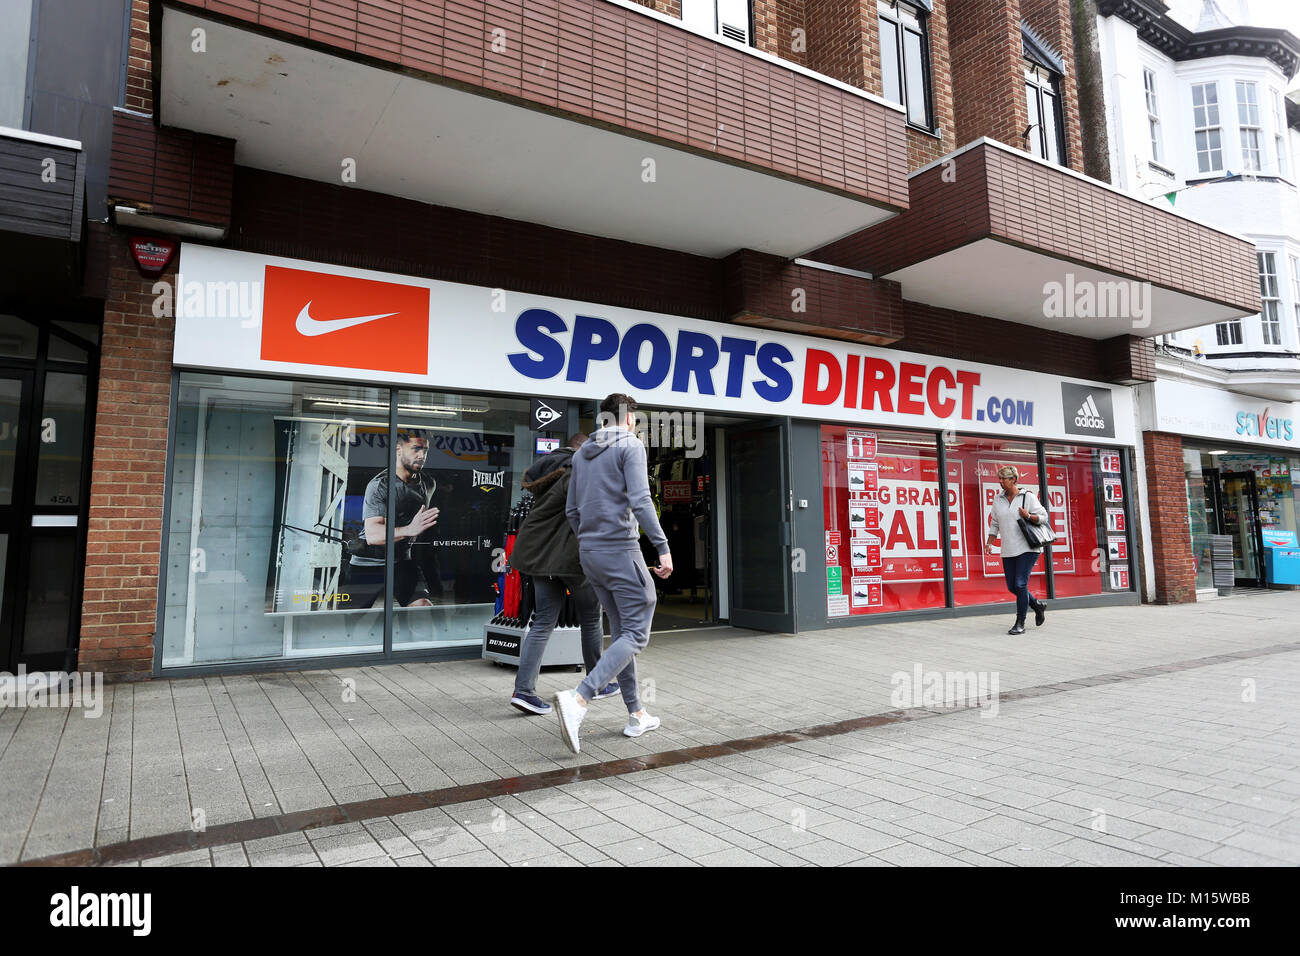 The Sports Direct store in Bognor Regis, West Sussex, UK. Stock Photo